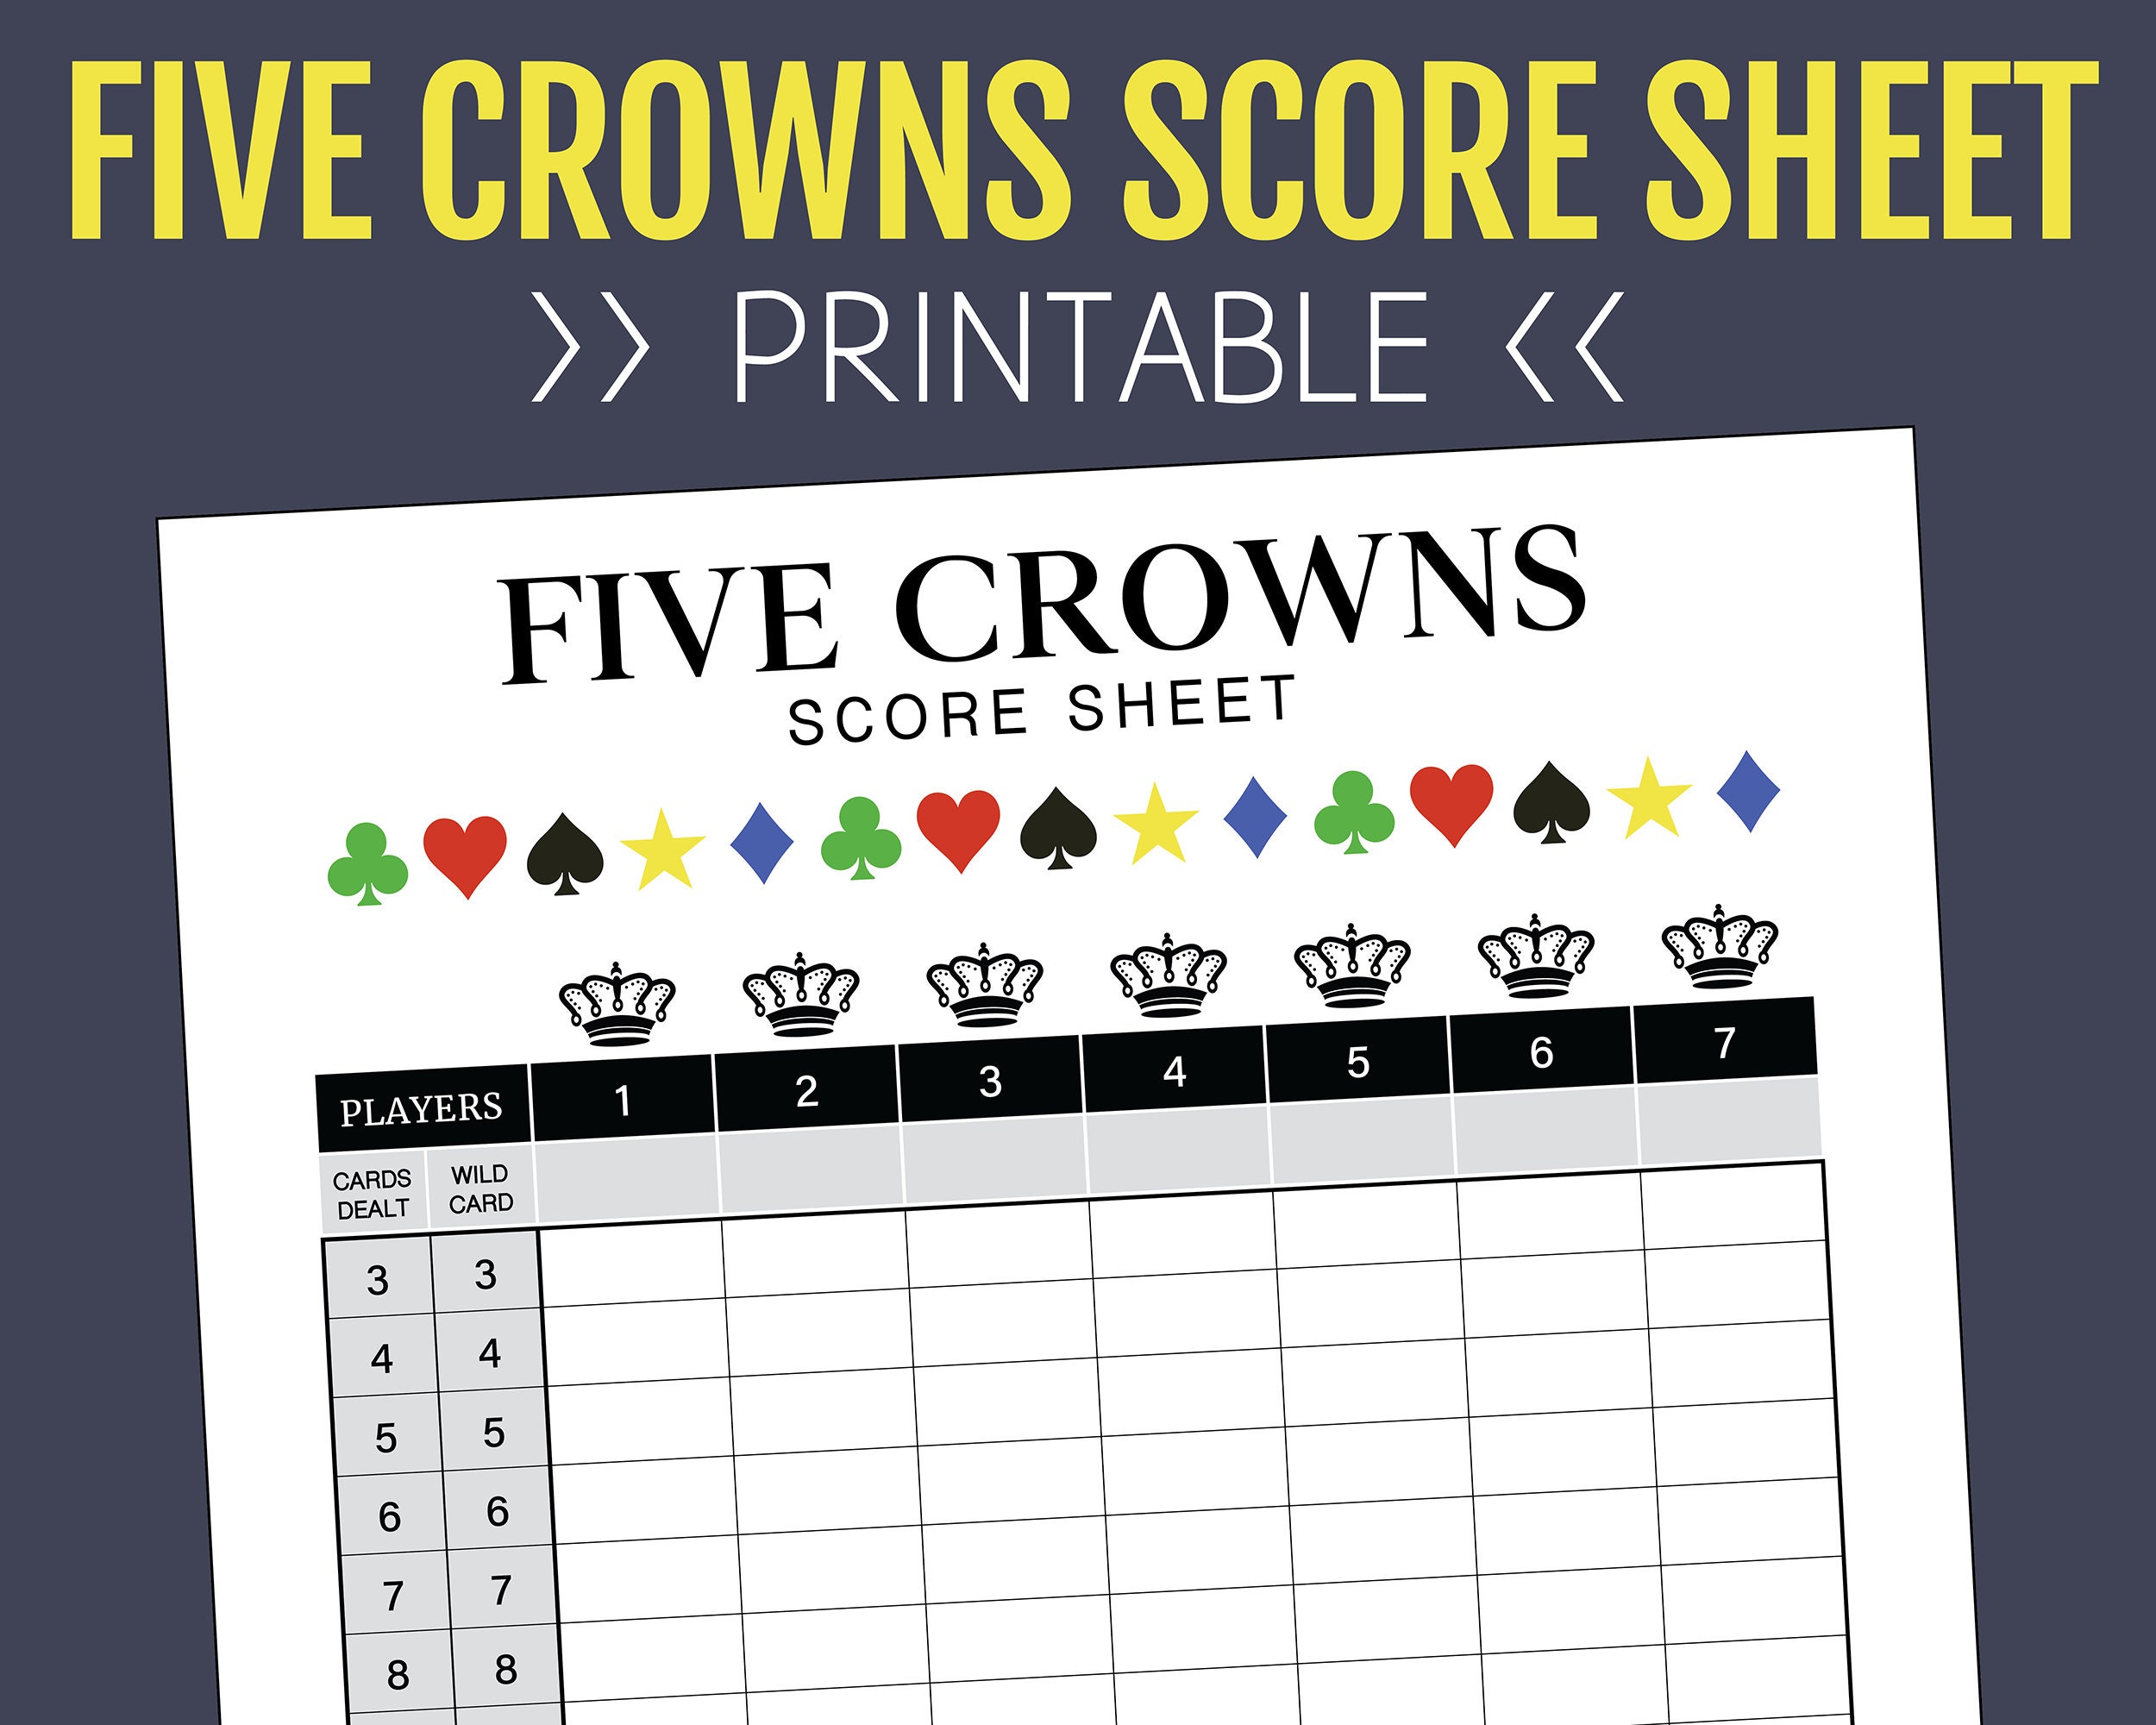 Scoring For 5 Crowns